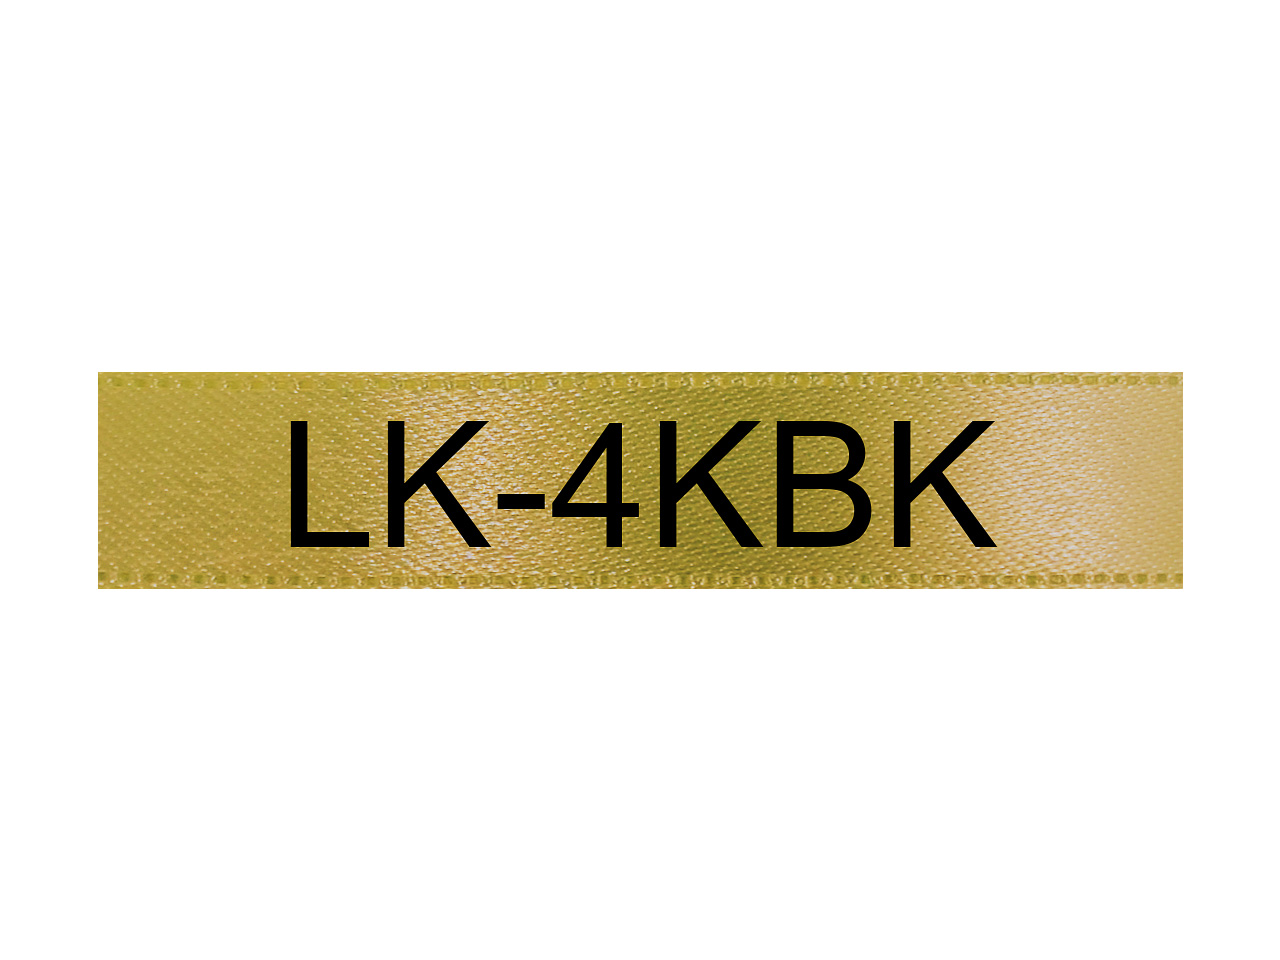 C53S654001 EPSON 12mm SCHWARZ GOLD LK4KBK Schriftband 5m satin ribbon 1